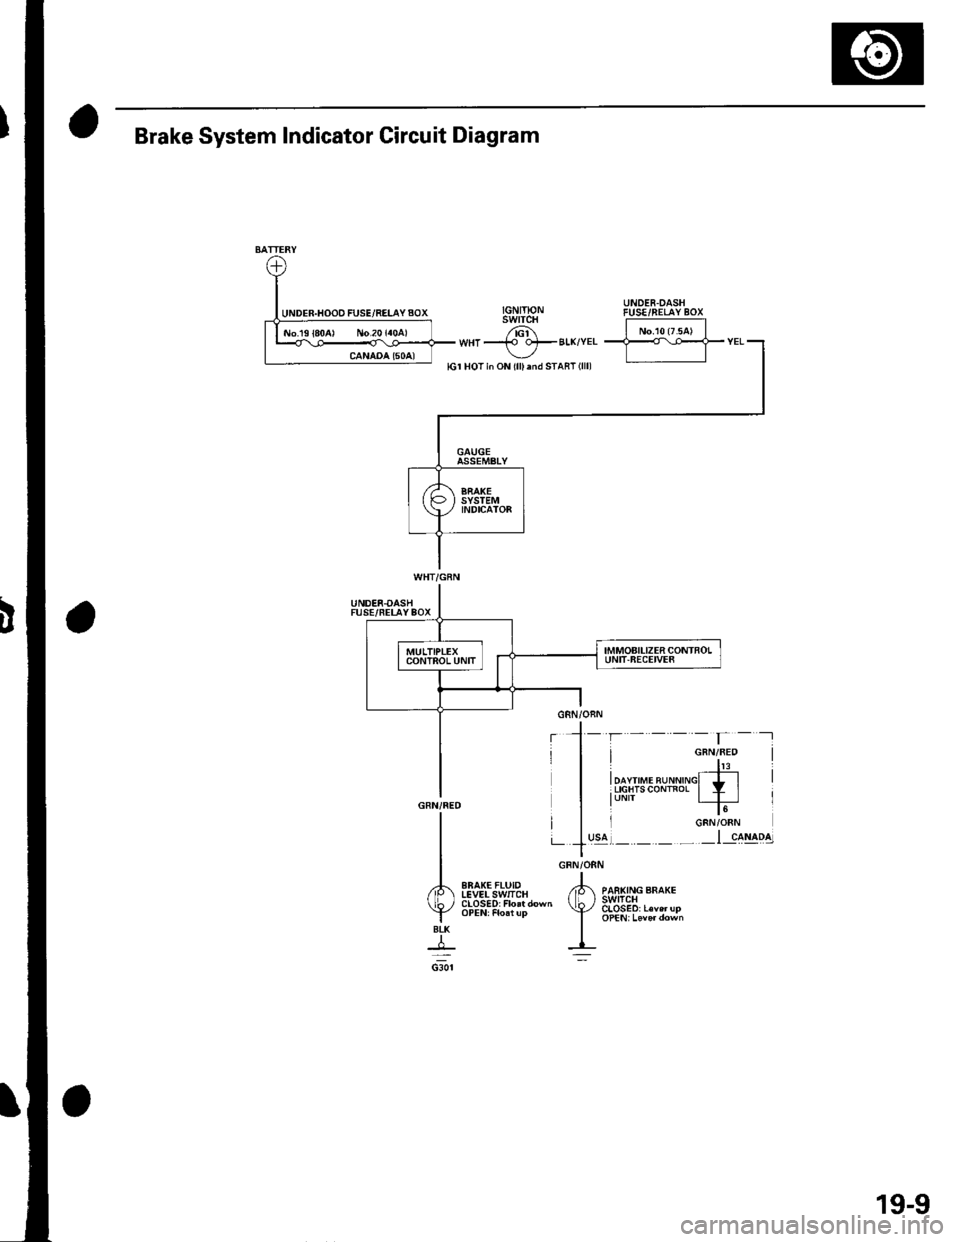 HONDA CIVIC 2003 7.G Workshop Manual GRN/ORN
,tk ,o"","o ""o*.(b, 3s1E8,.""",,"
I oPEN,Leve,down
I-=:
I
A
YBtK
+csor
Brake System Indicator Circuit Diagram
UNDER.OASHFUSE/FELAYBOX
EBAK€FLUIDIEVELSwlICH
19-9 